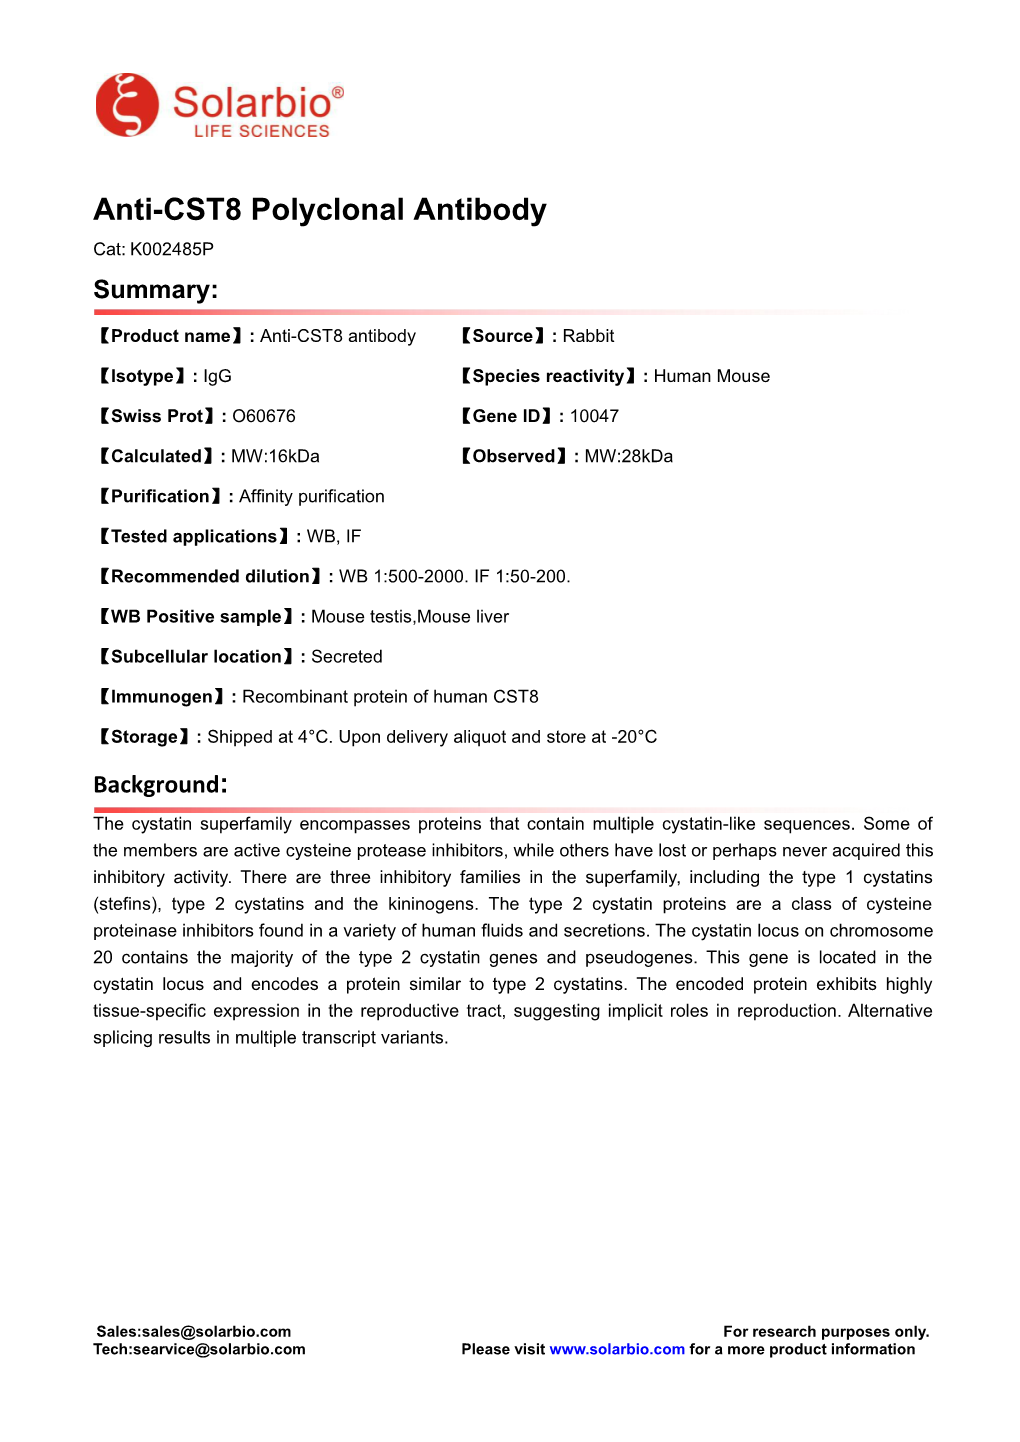 Anti-CST8 Polyclonal Antibody Cat: K002485P Summary